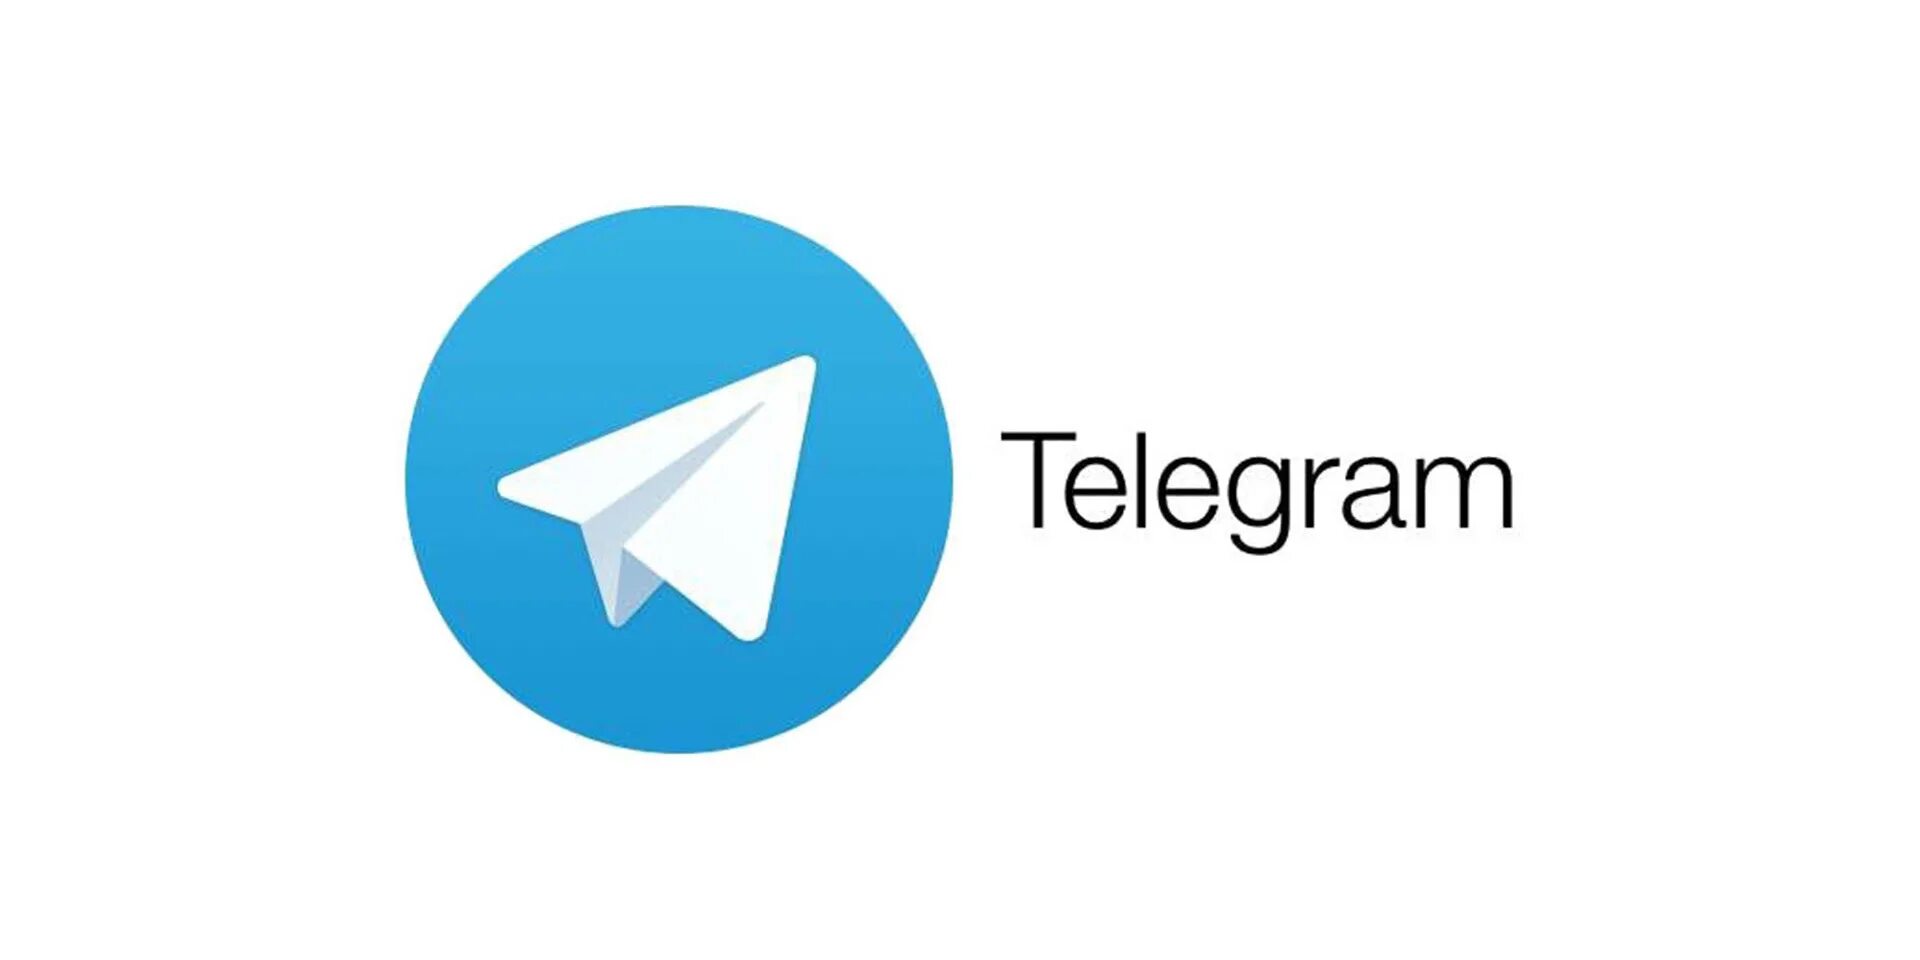 Эмблема телеграмма. Значок телеграмм канала. Логотип для телеграмм канала. Щначок телеграммканал. Мессенджер дурова